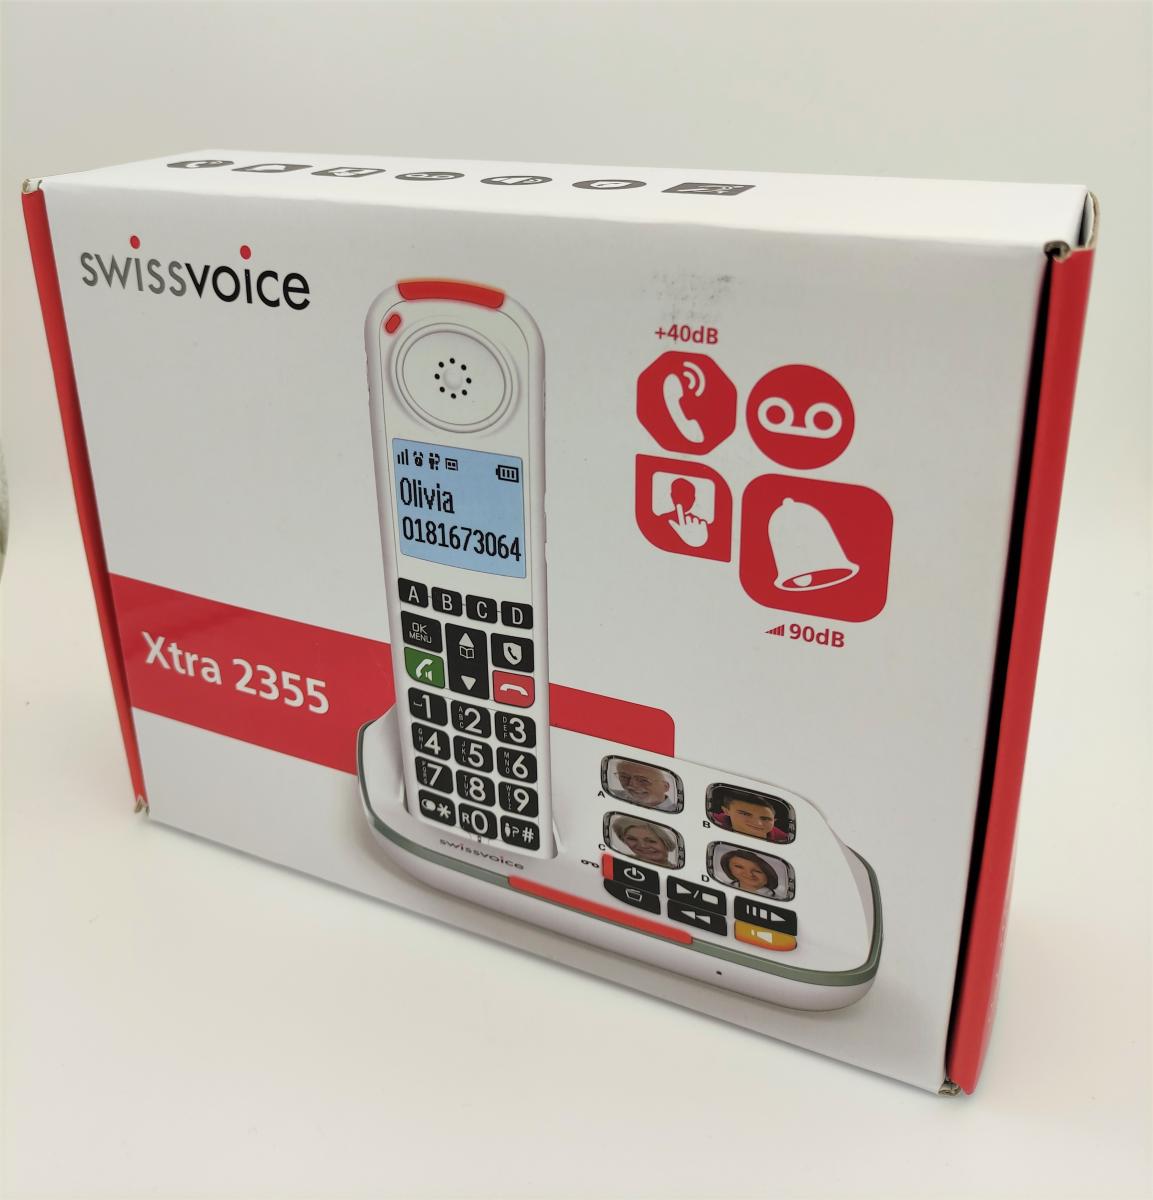 Swissvoice Xtra 2355 Box